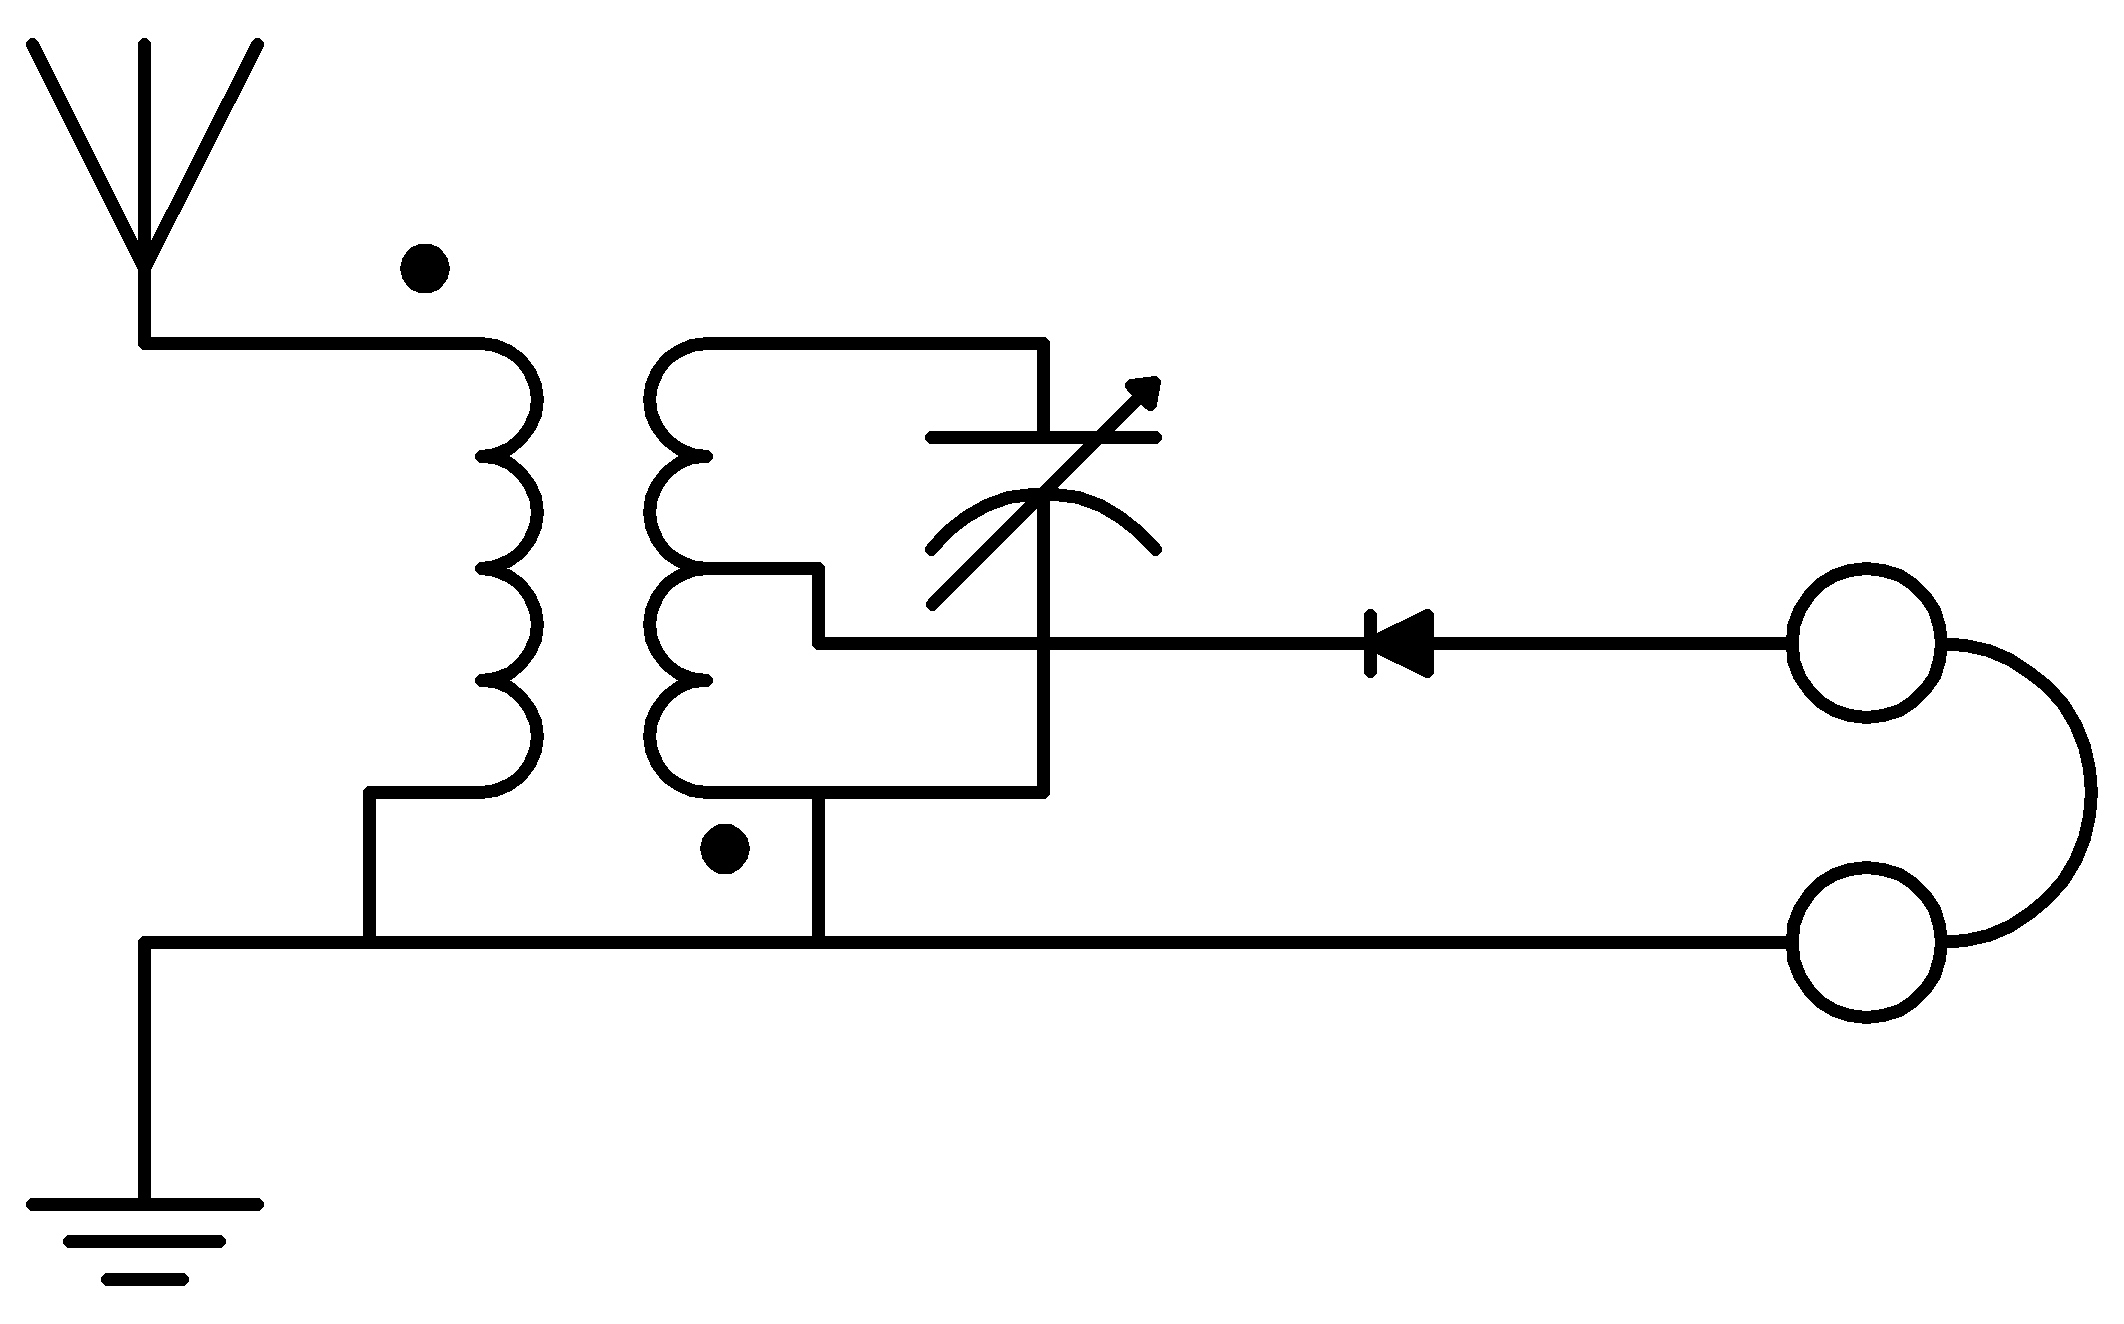 Component. symbol of a resistor: Resistor Symbols Clipart Best ...